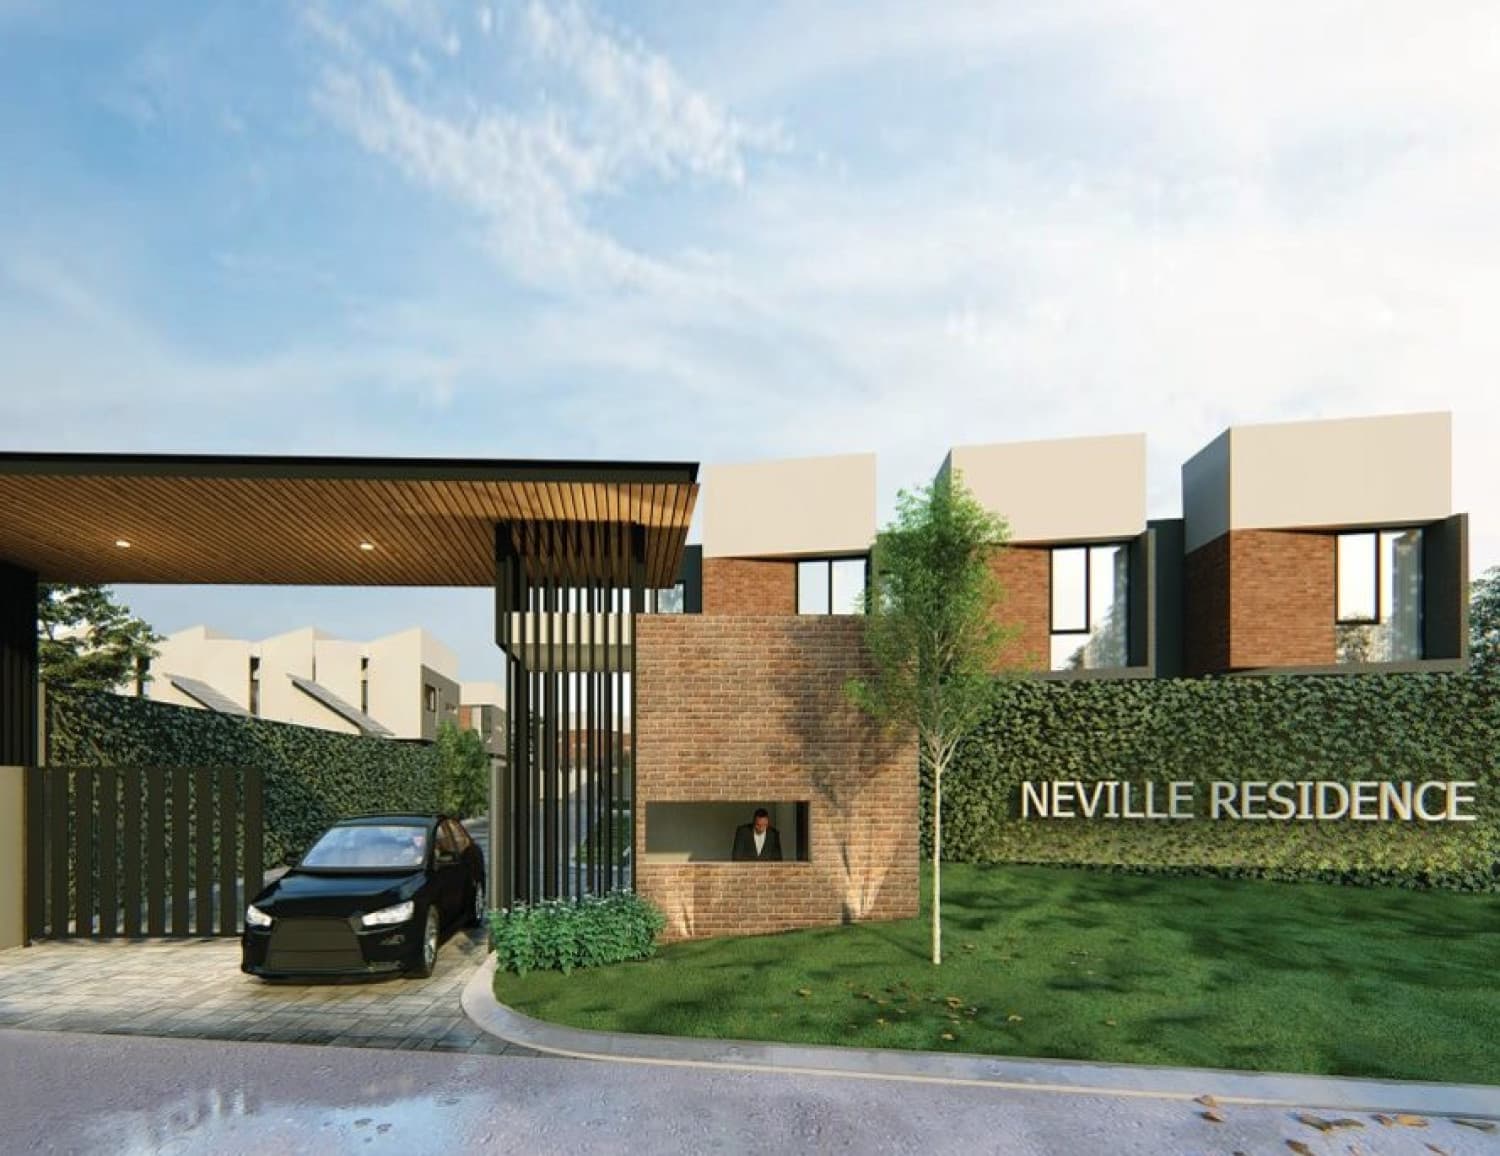 Neville Residence